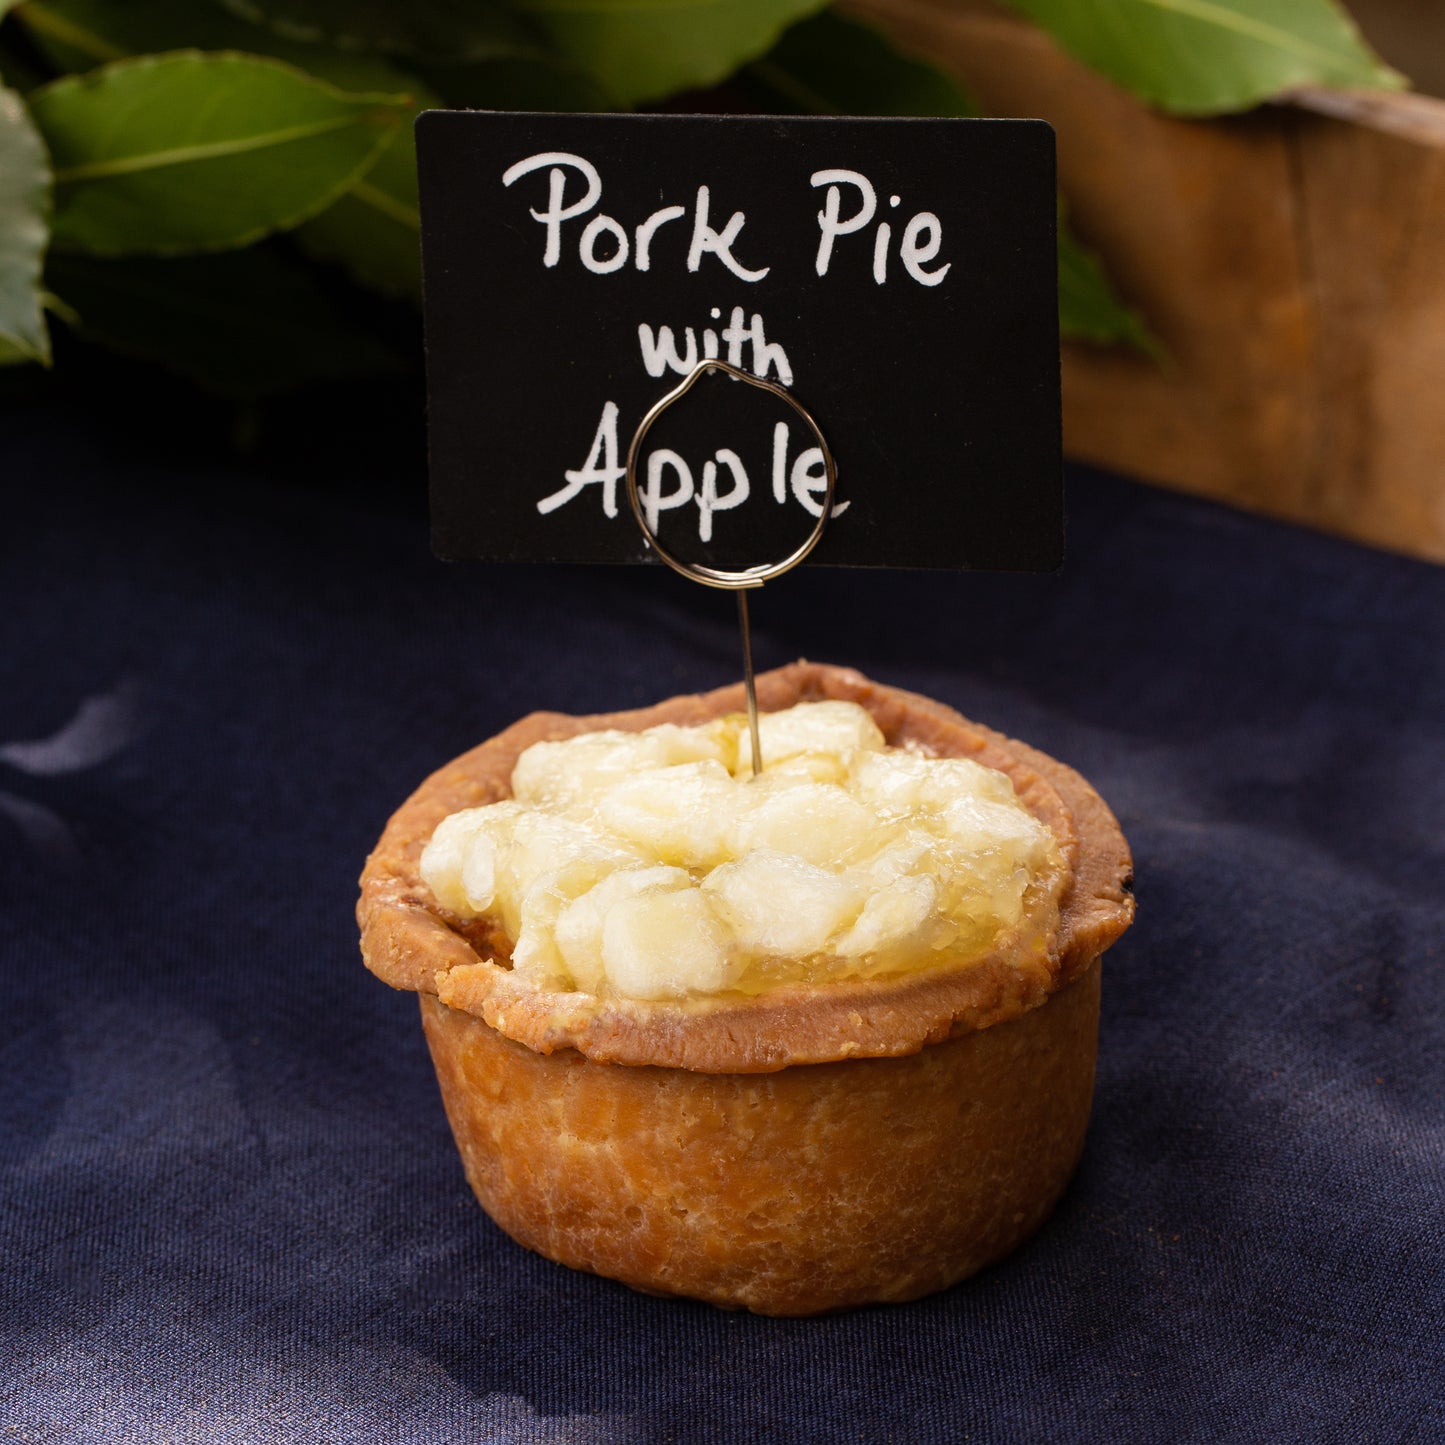 Picnic Pork Pie with Apple Top